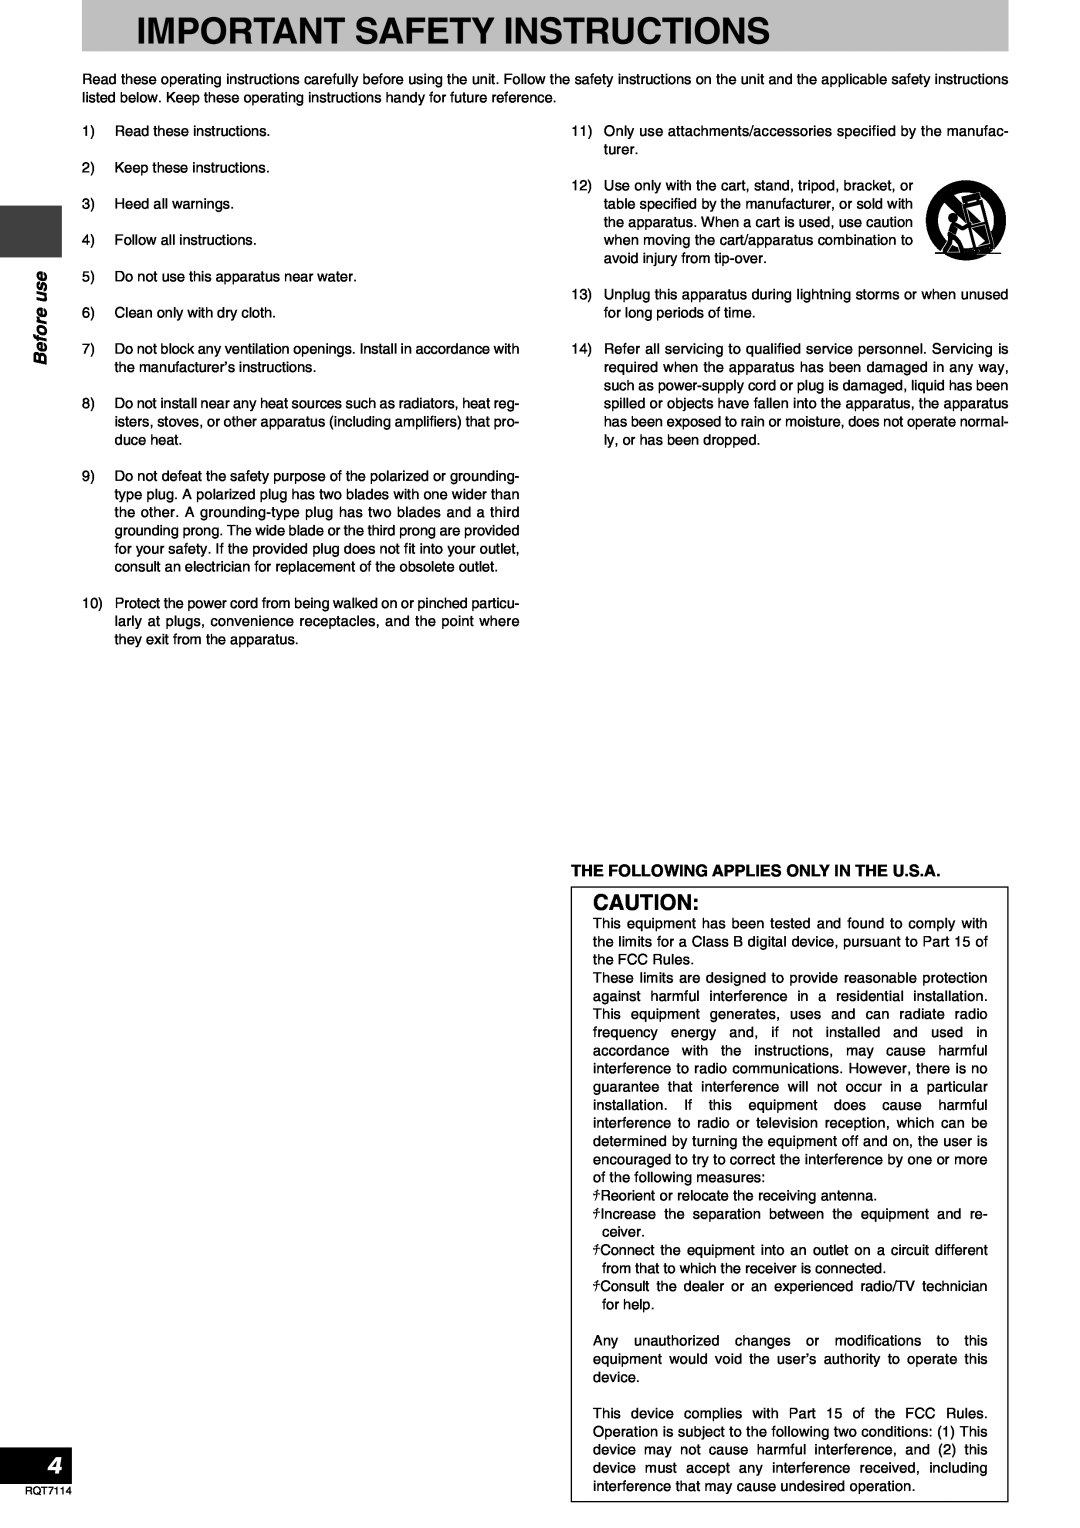 Panasonic RQT7114-2Y, SLDZ1200 manual Before use, Important Safety Instructions 